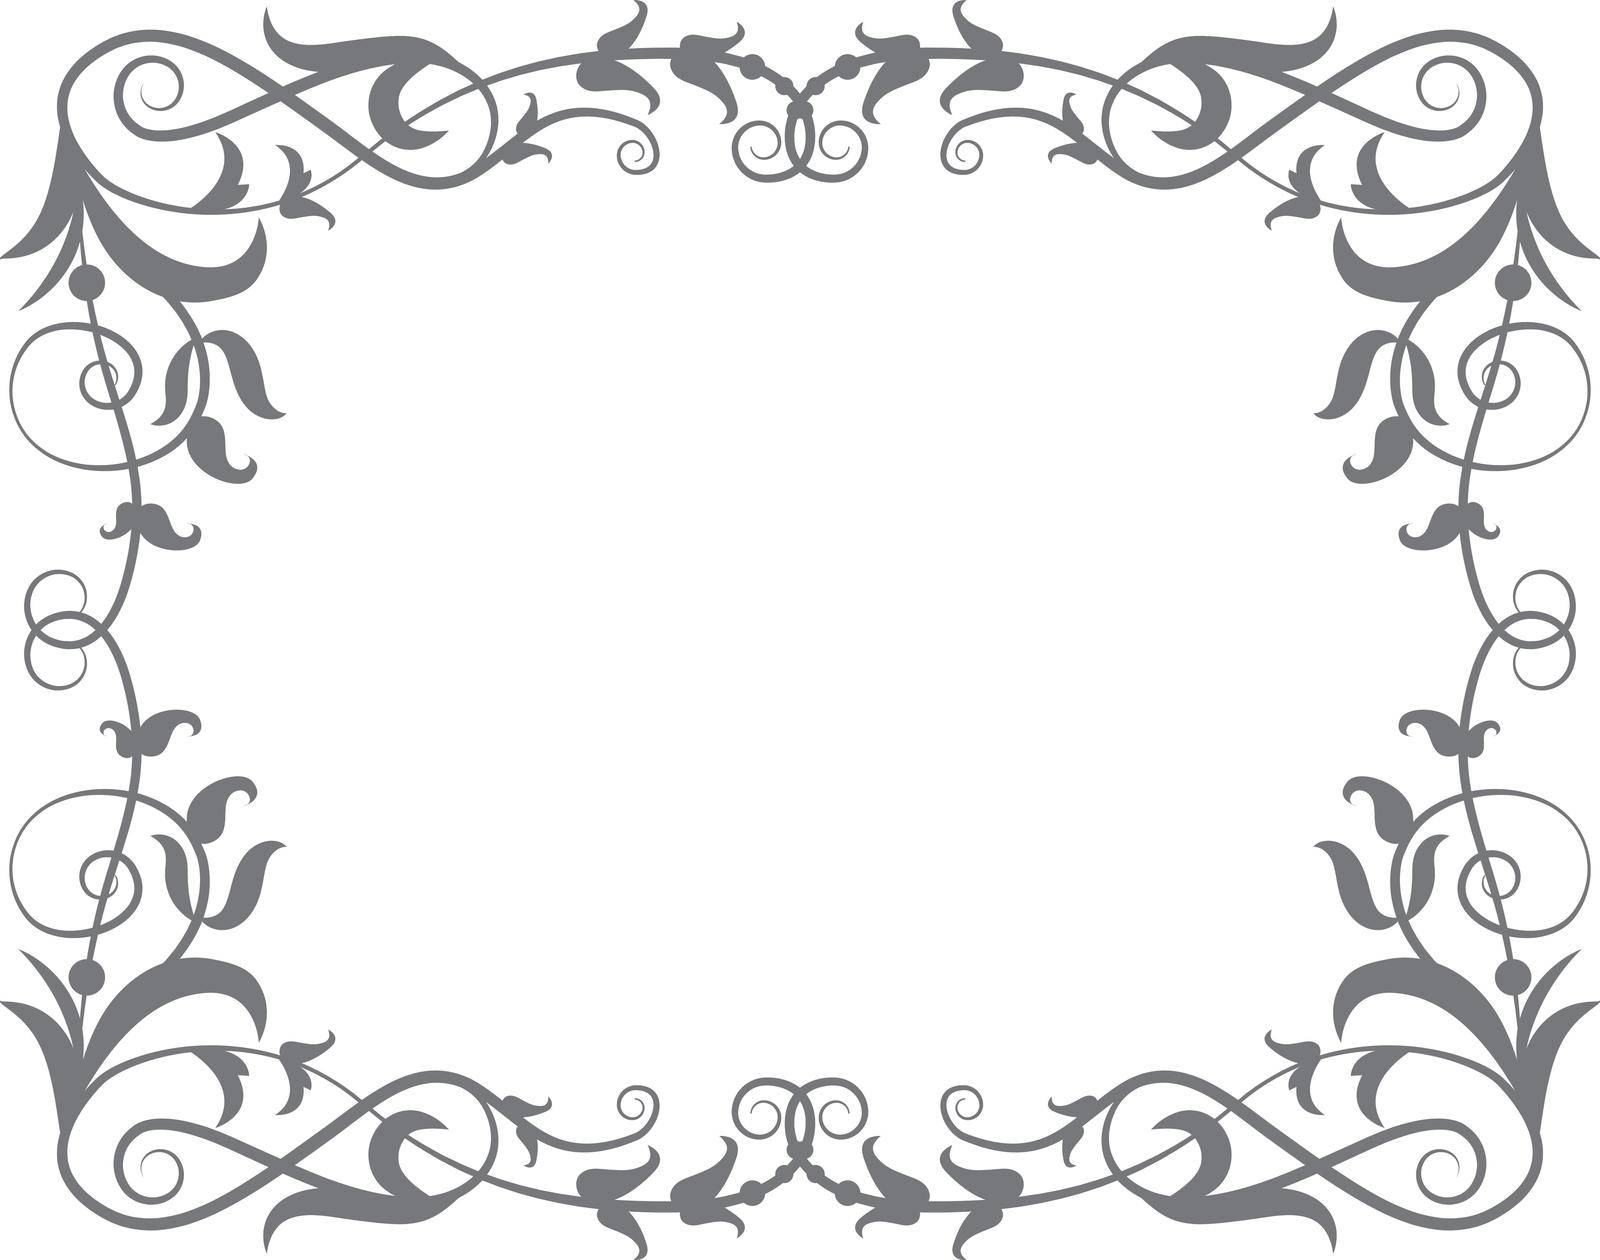 Filigree frame. Decorative floral motif. Vintage border isolated on white background